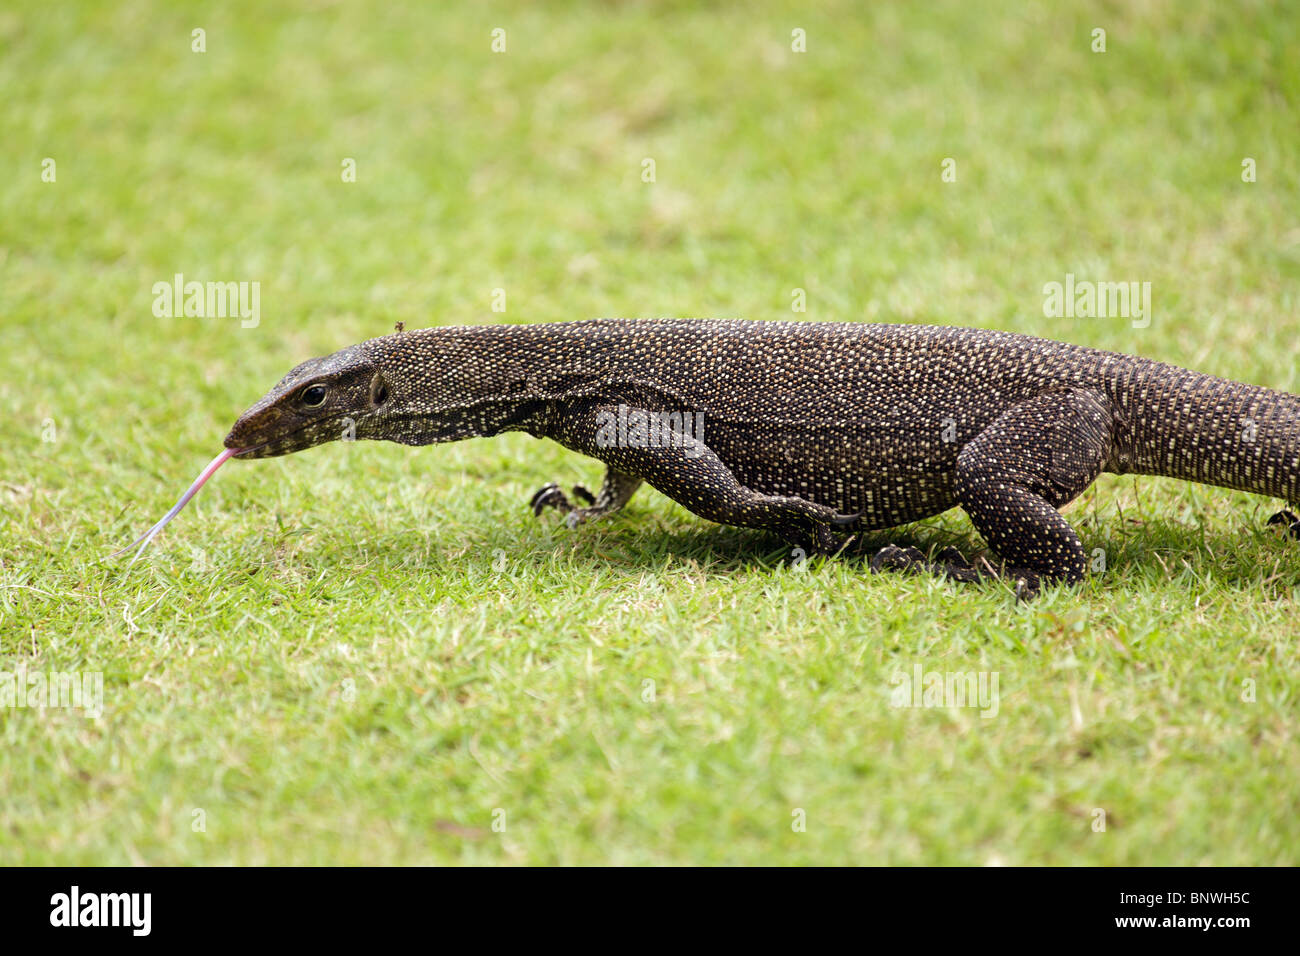 Ampio monitor lizard varan camminando su erba, Malaysia Foto Stock